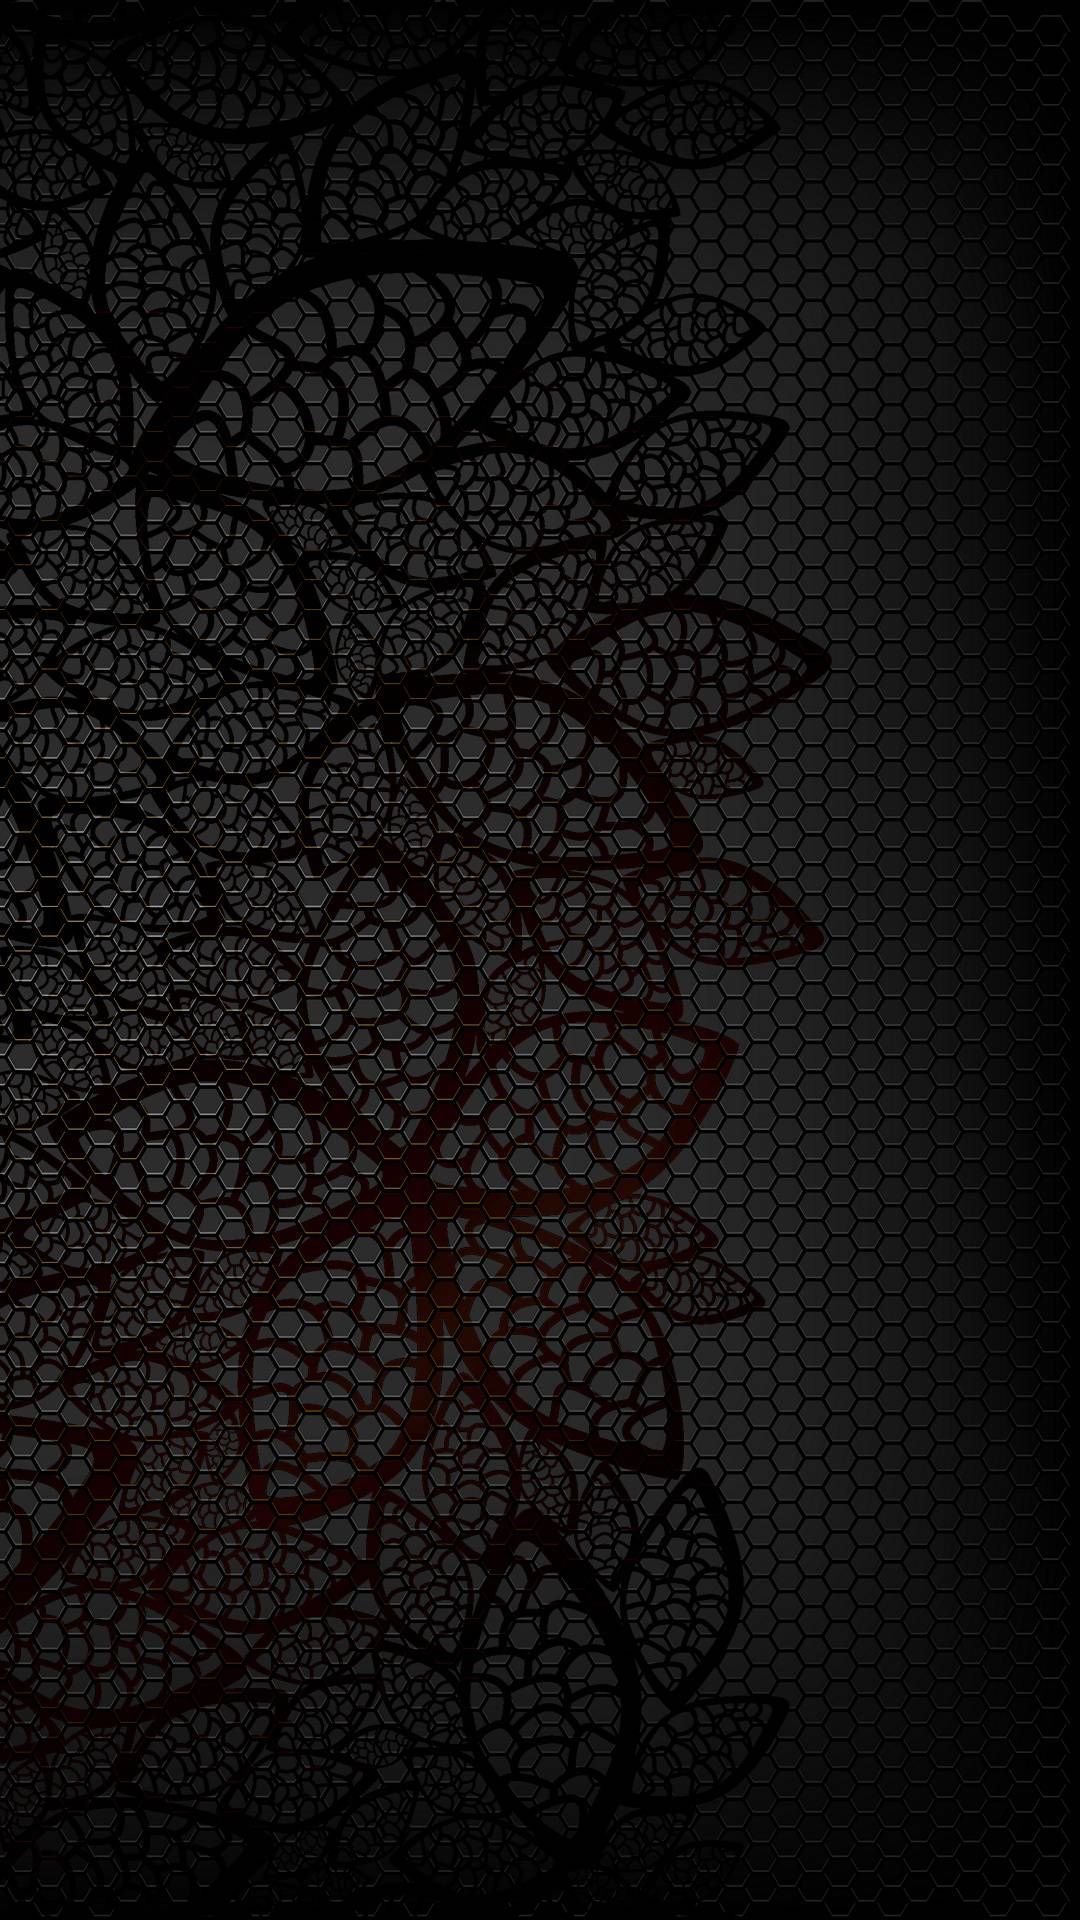 MuchaTseBle. Xperia wallpaper, iPhone wallpaper, Black wallpaper